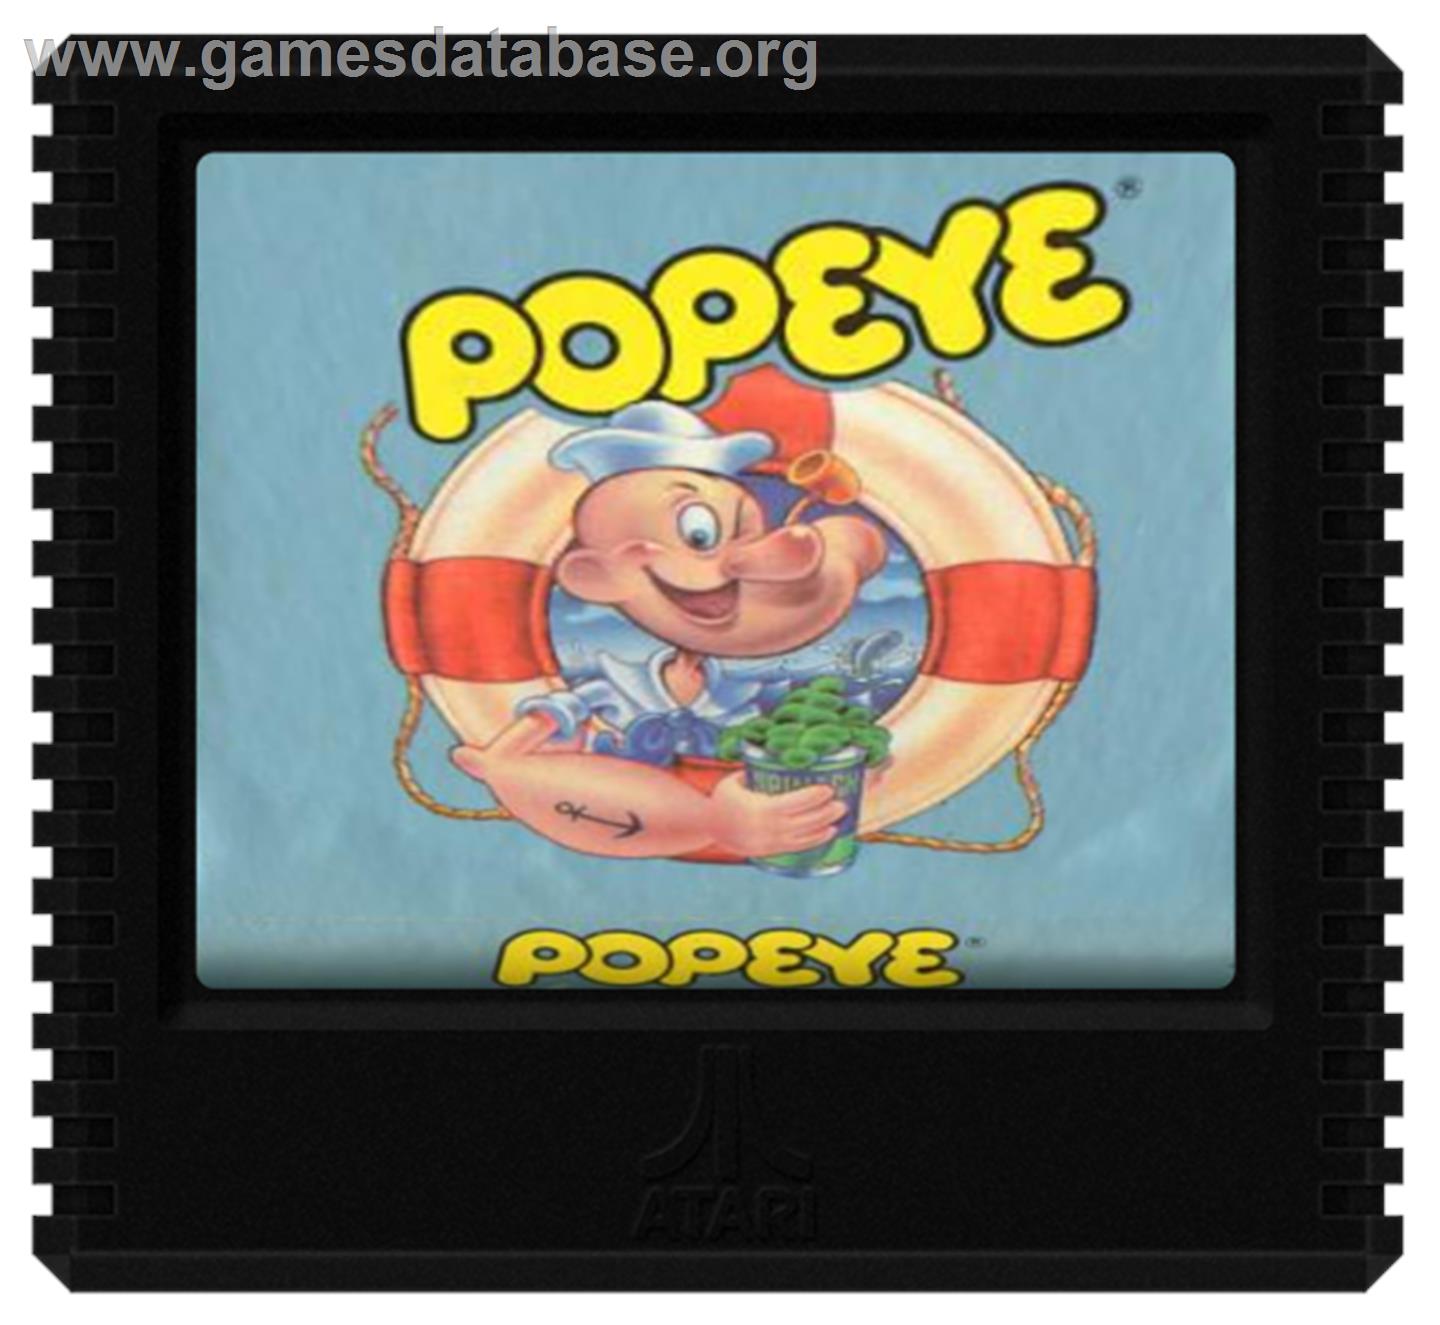 Popeye - Atari 5200 - Artwork - Cartridge